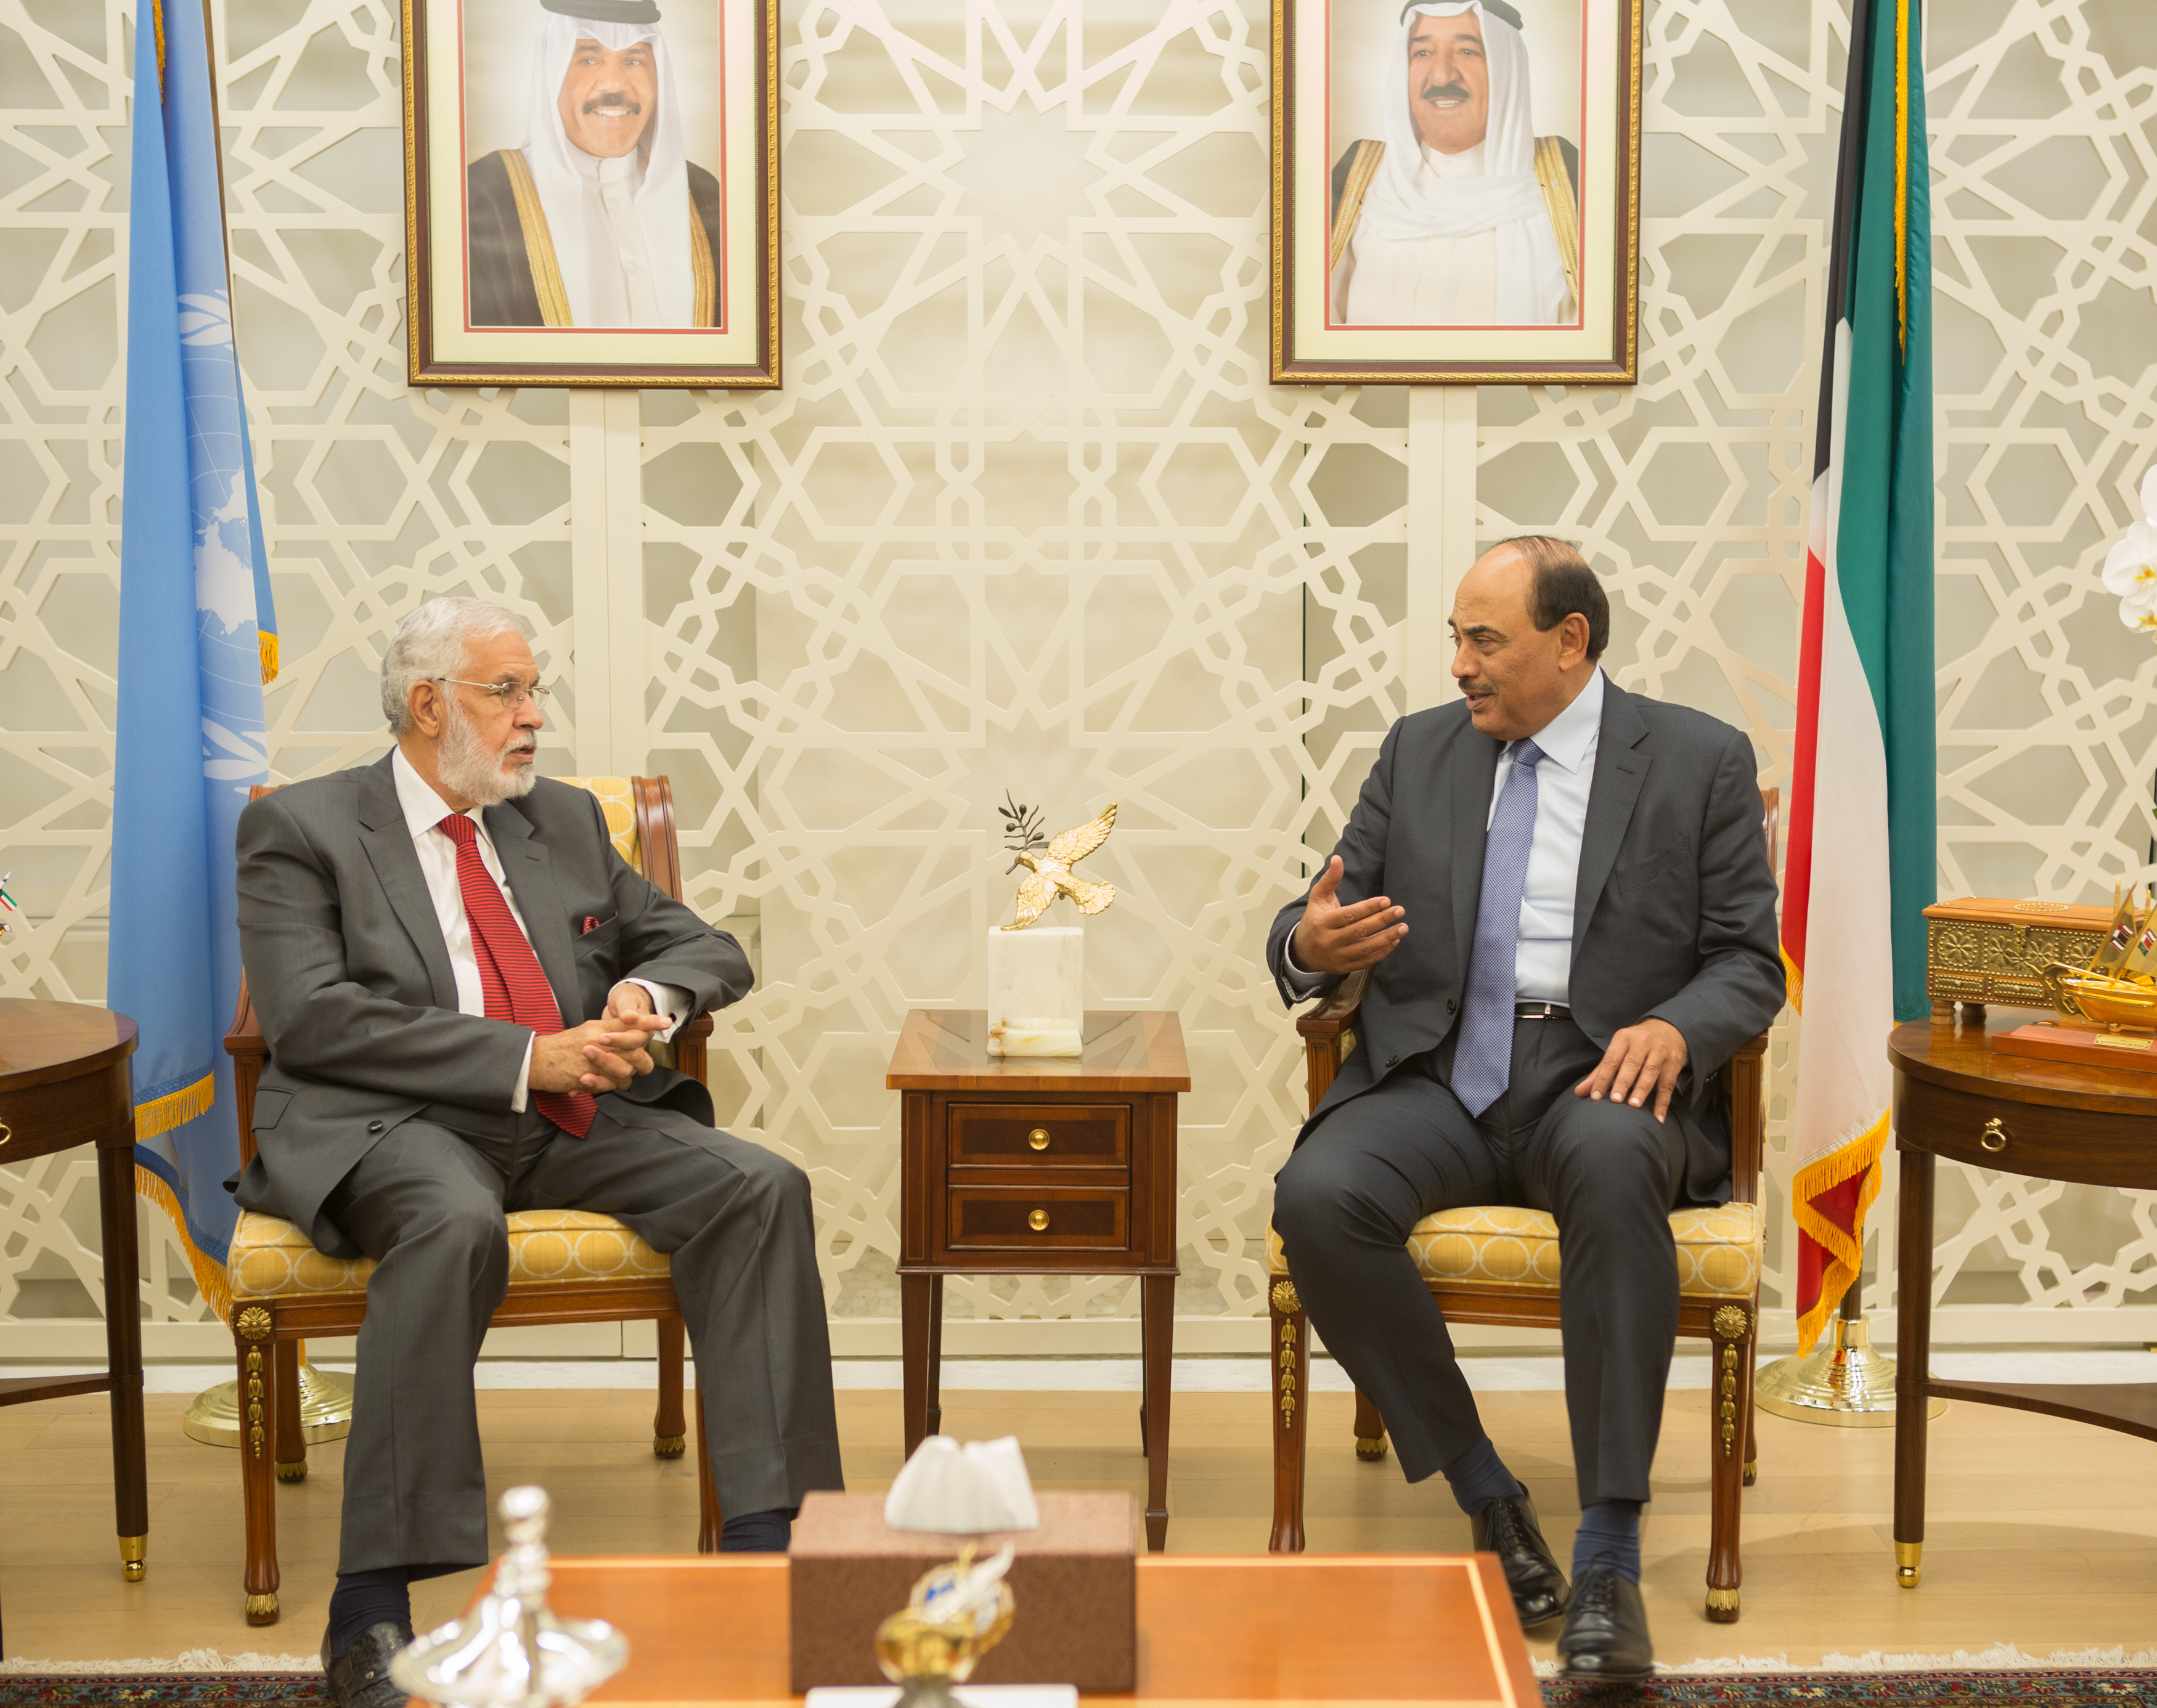 Kuwait's Deputy Prime Minister and Foreign Minister Sheikh Sabah Khaled Al-Hamad Al-Sabah meets Libya's Foreign Minister Mohamed Taher Siala